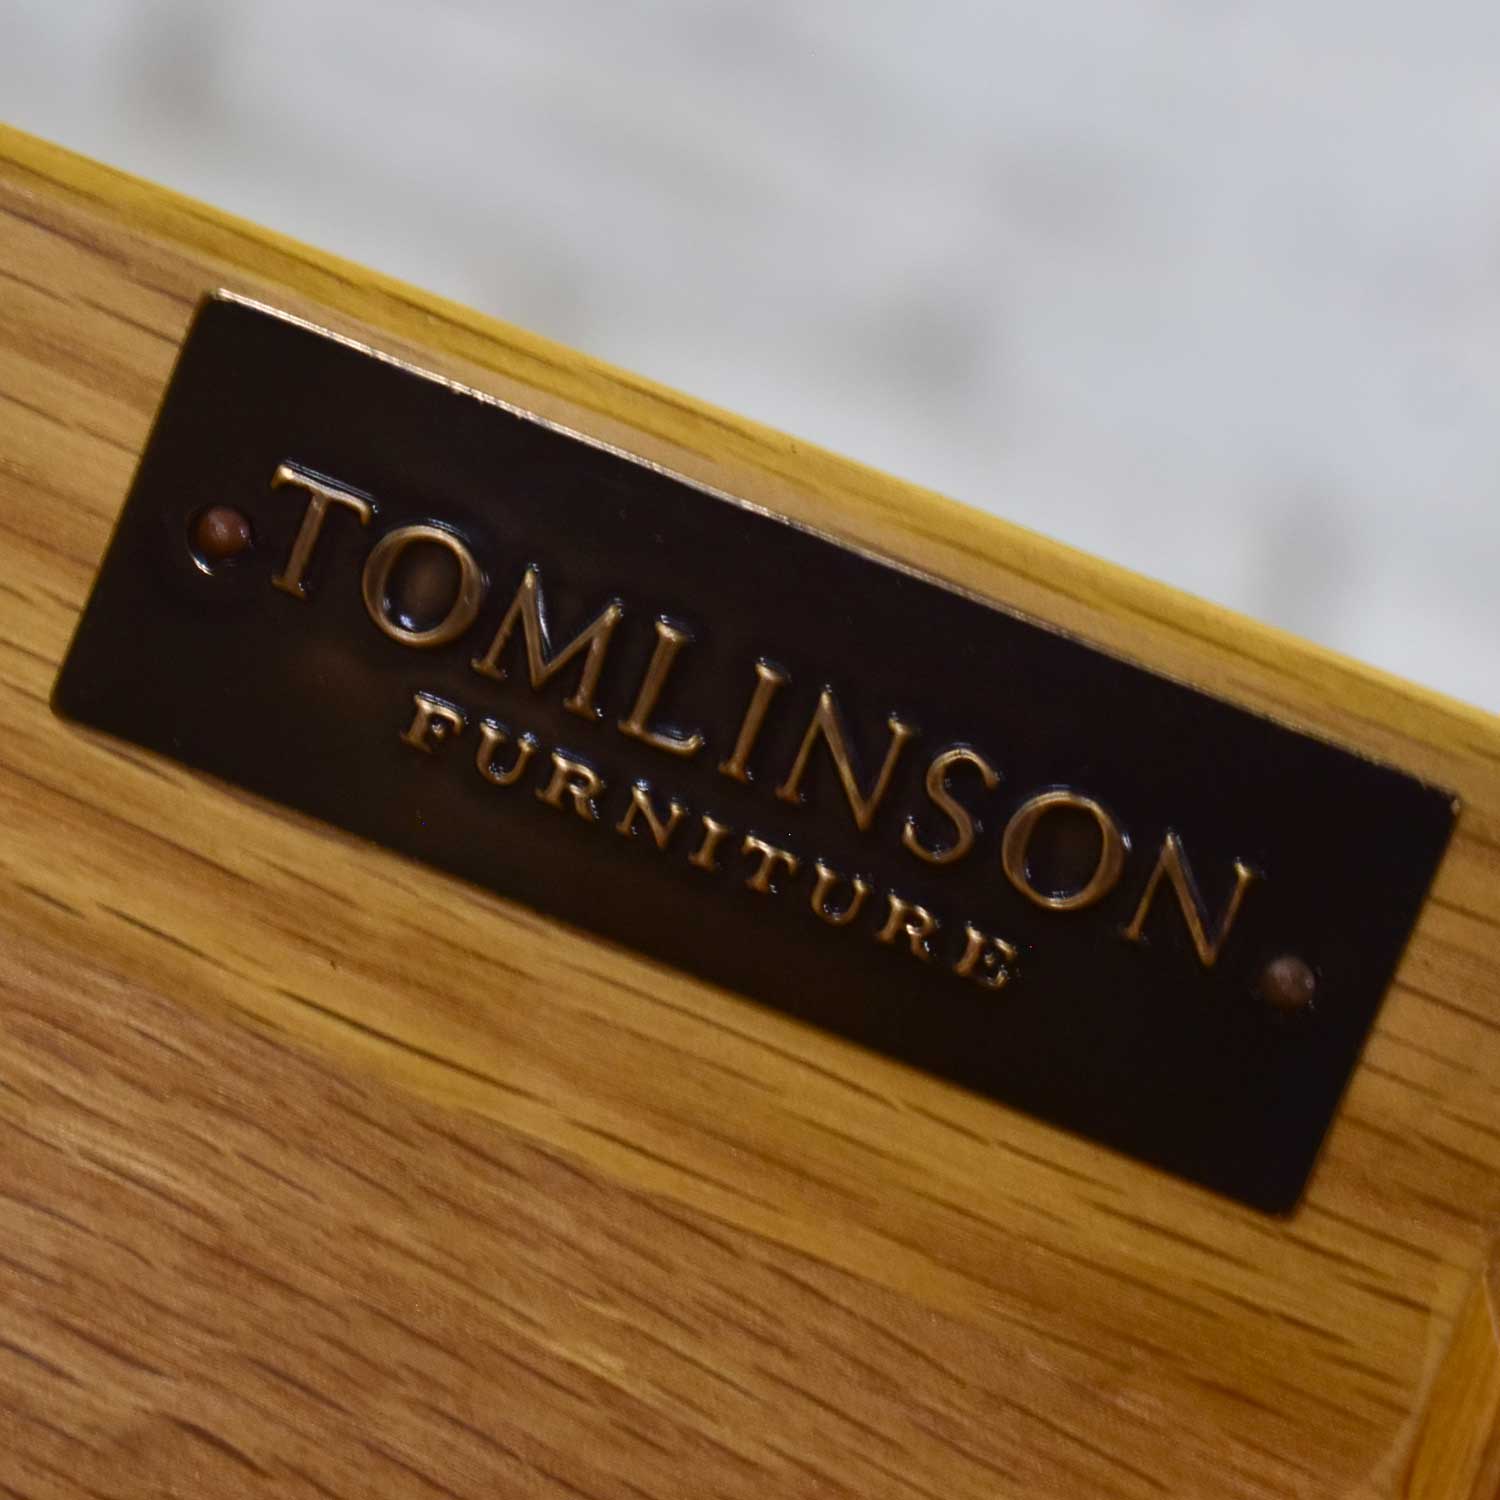 Modern Hollywood Regency Walnut Parson’s Style Hall Writing Desk by Tomlinson Furniture